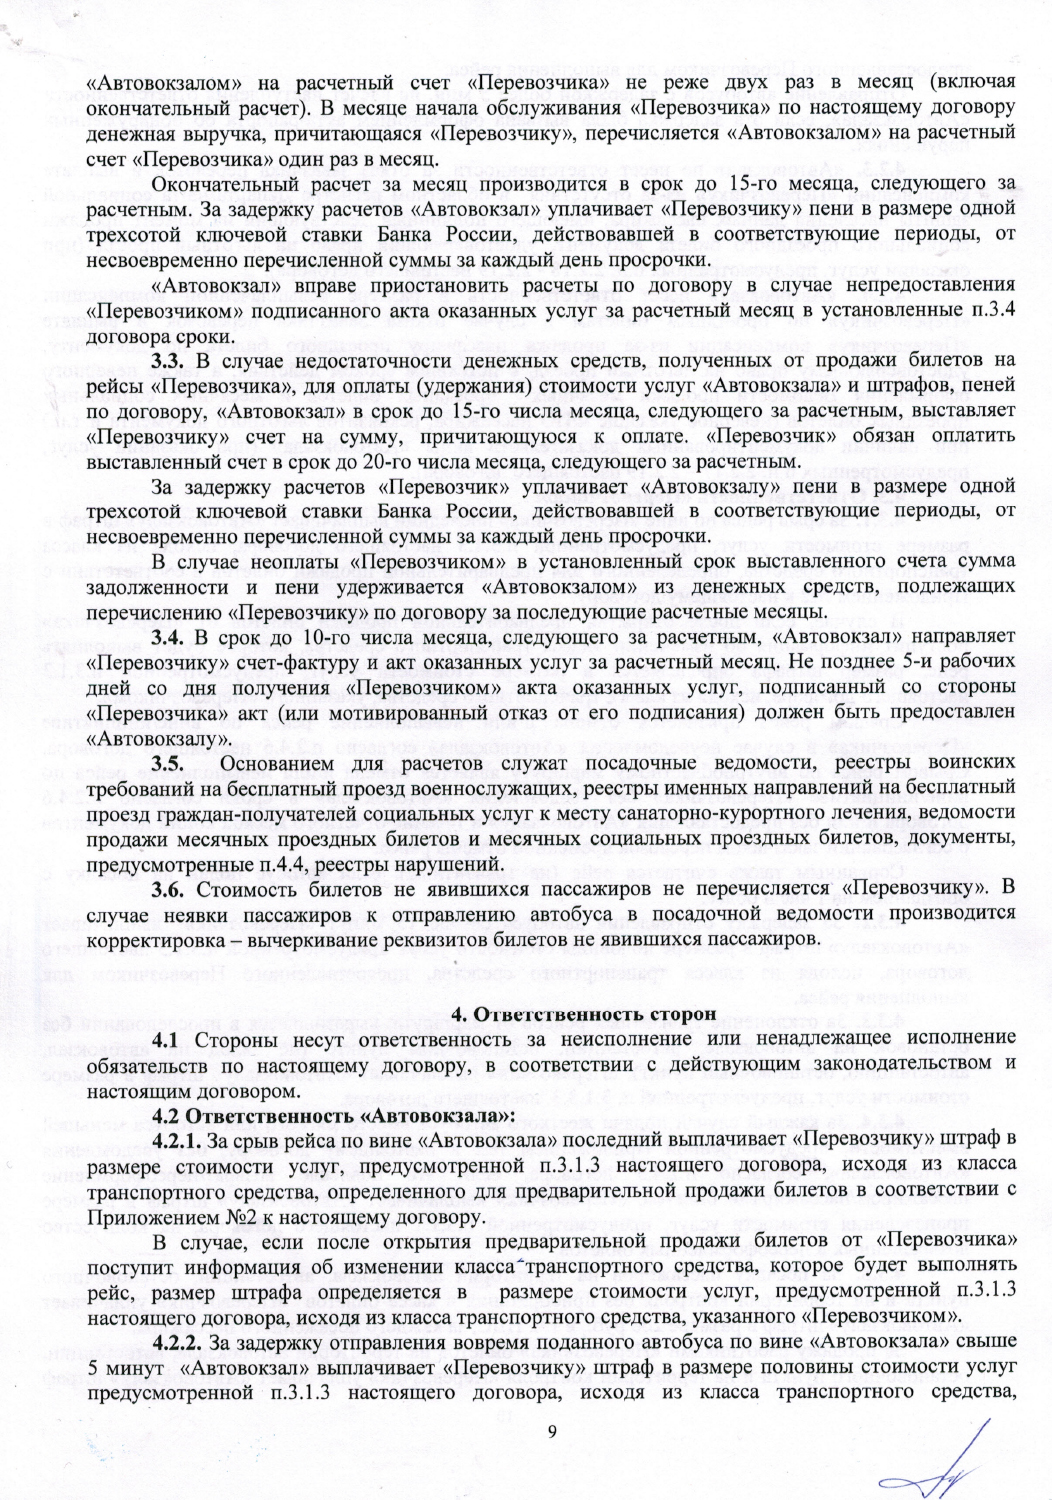 Договор ГУП владимиский вокзал-9.jpg